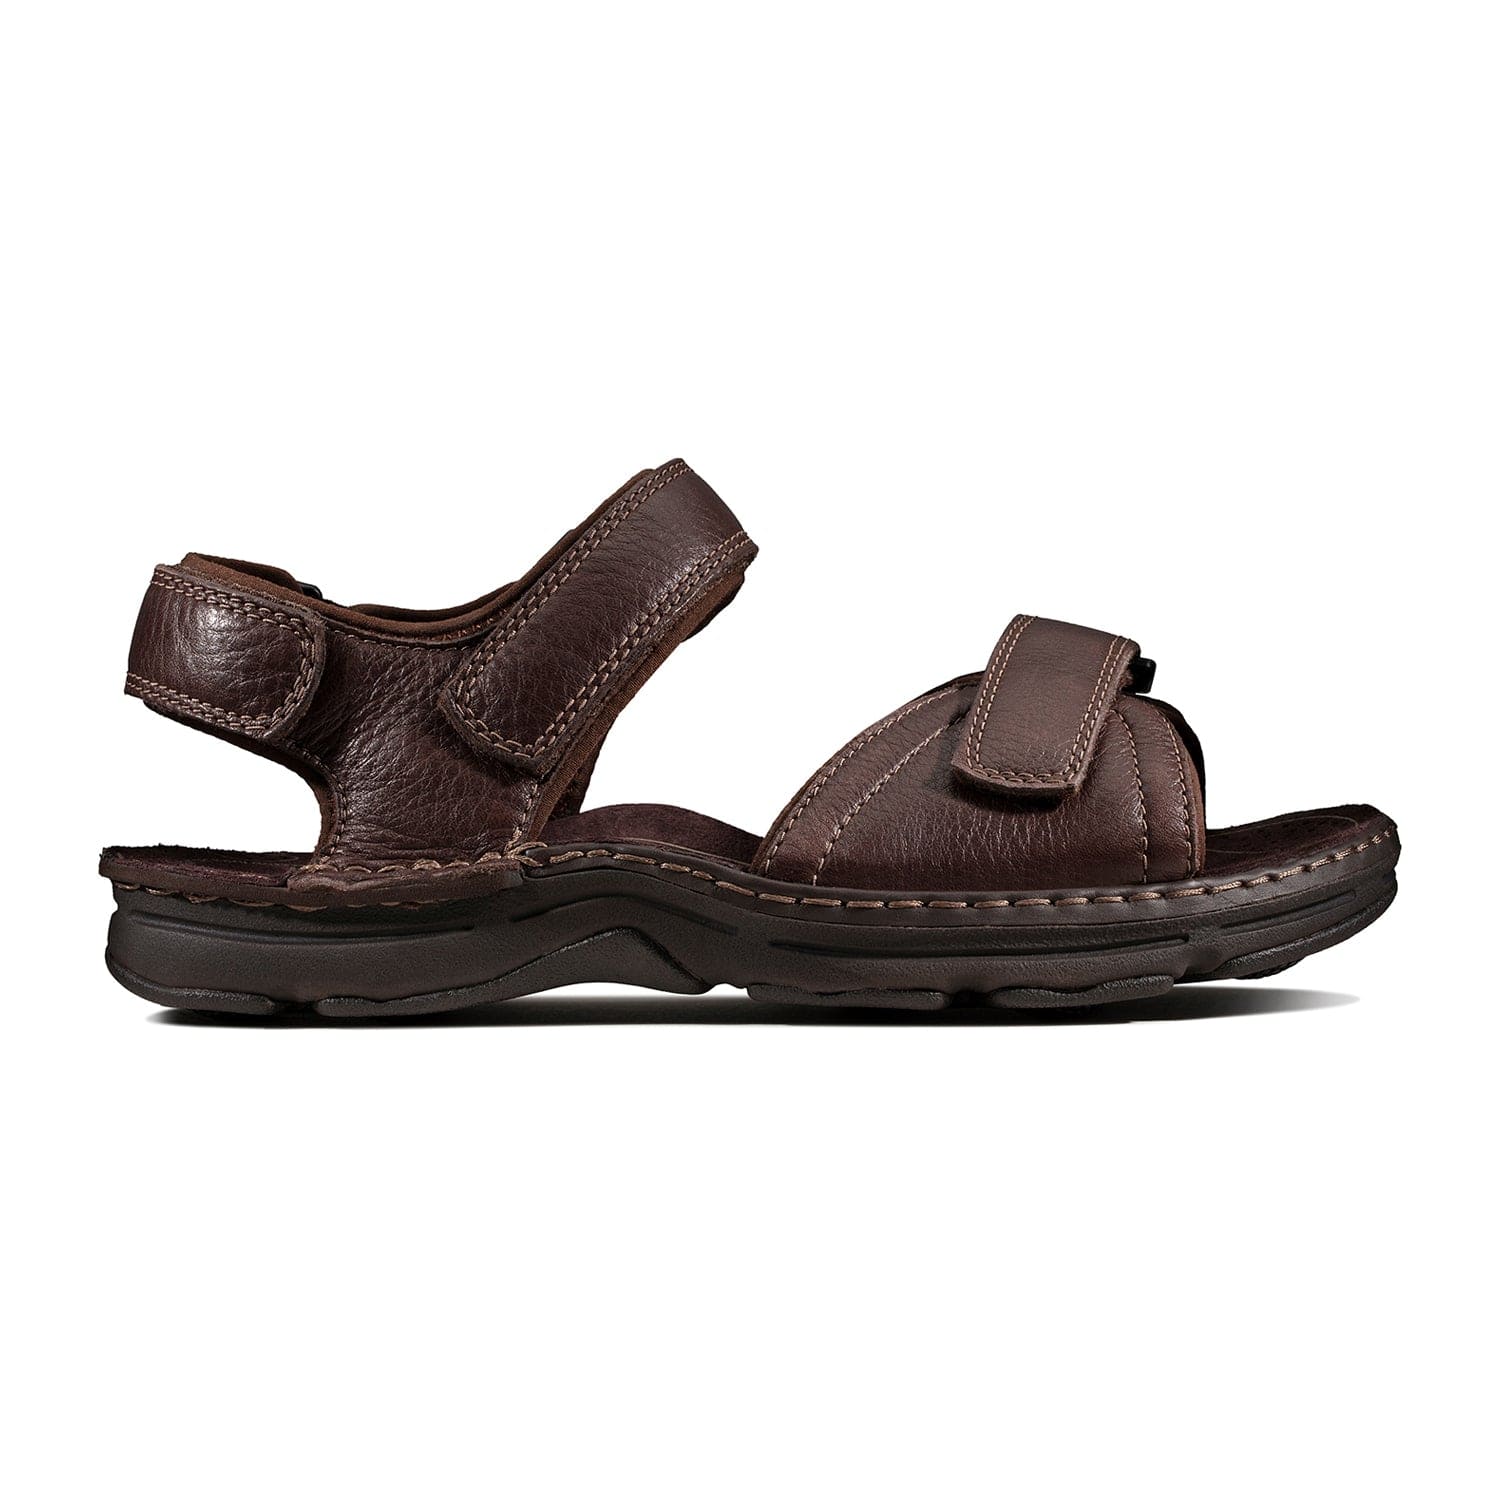 Clarks ATL Part       Sandals - Dark Brown Leather - 203531967 - G Width (Standard Fit)